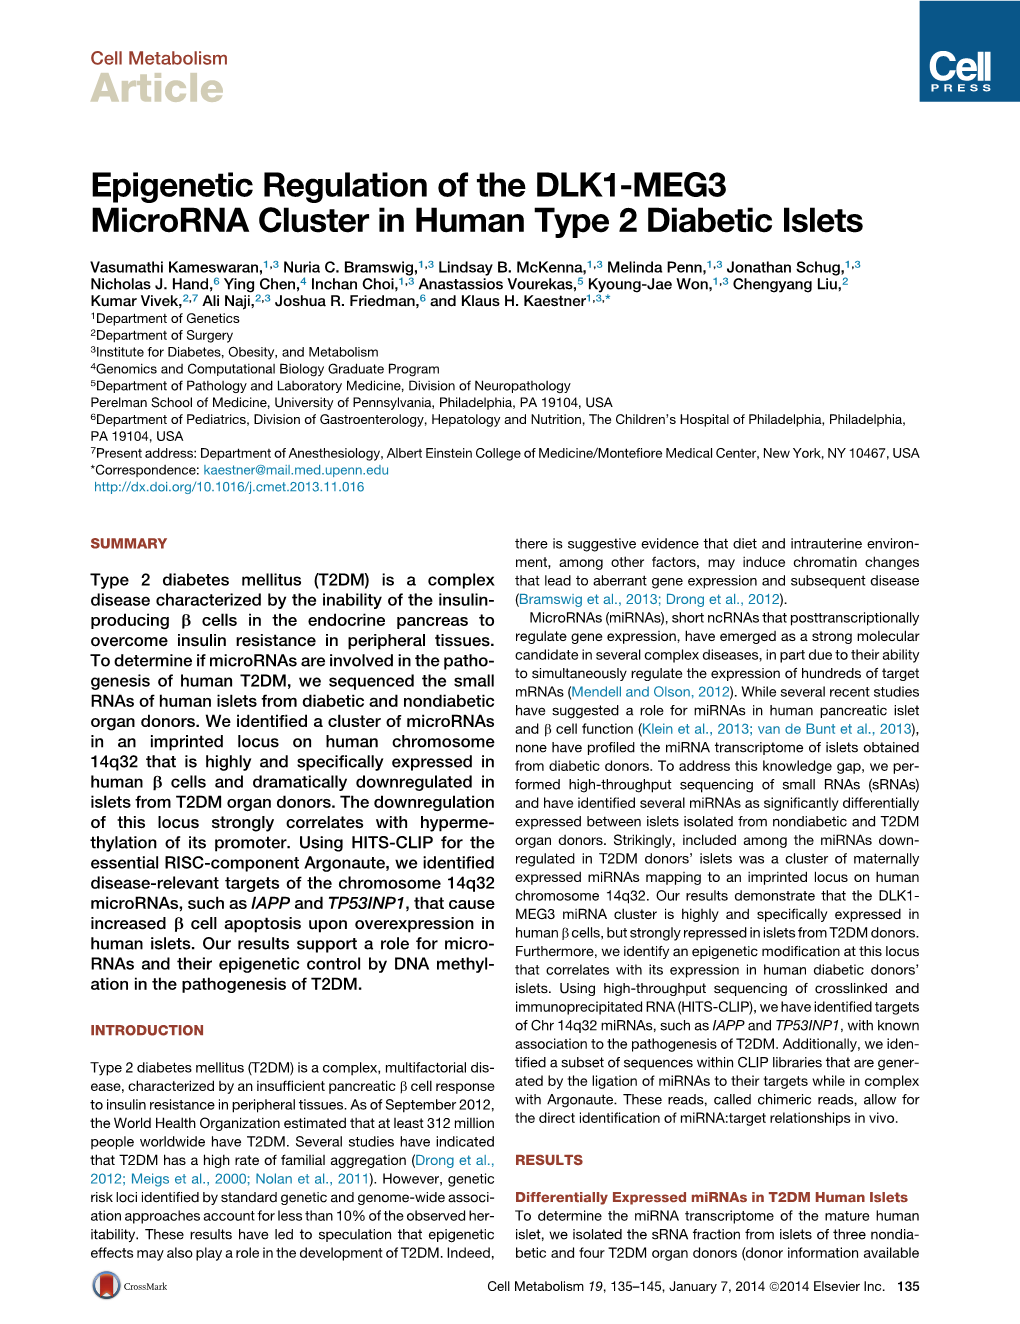 Epigenetic Regulation of the DLK1-MEG3 Microrna Cluster in Human Type 2 Diabetic Islets